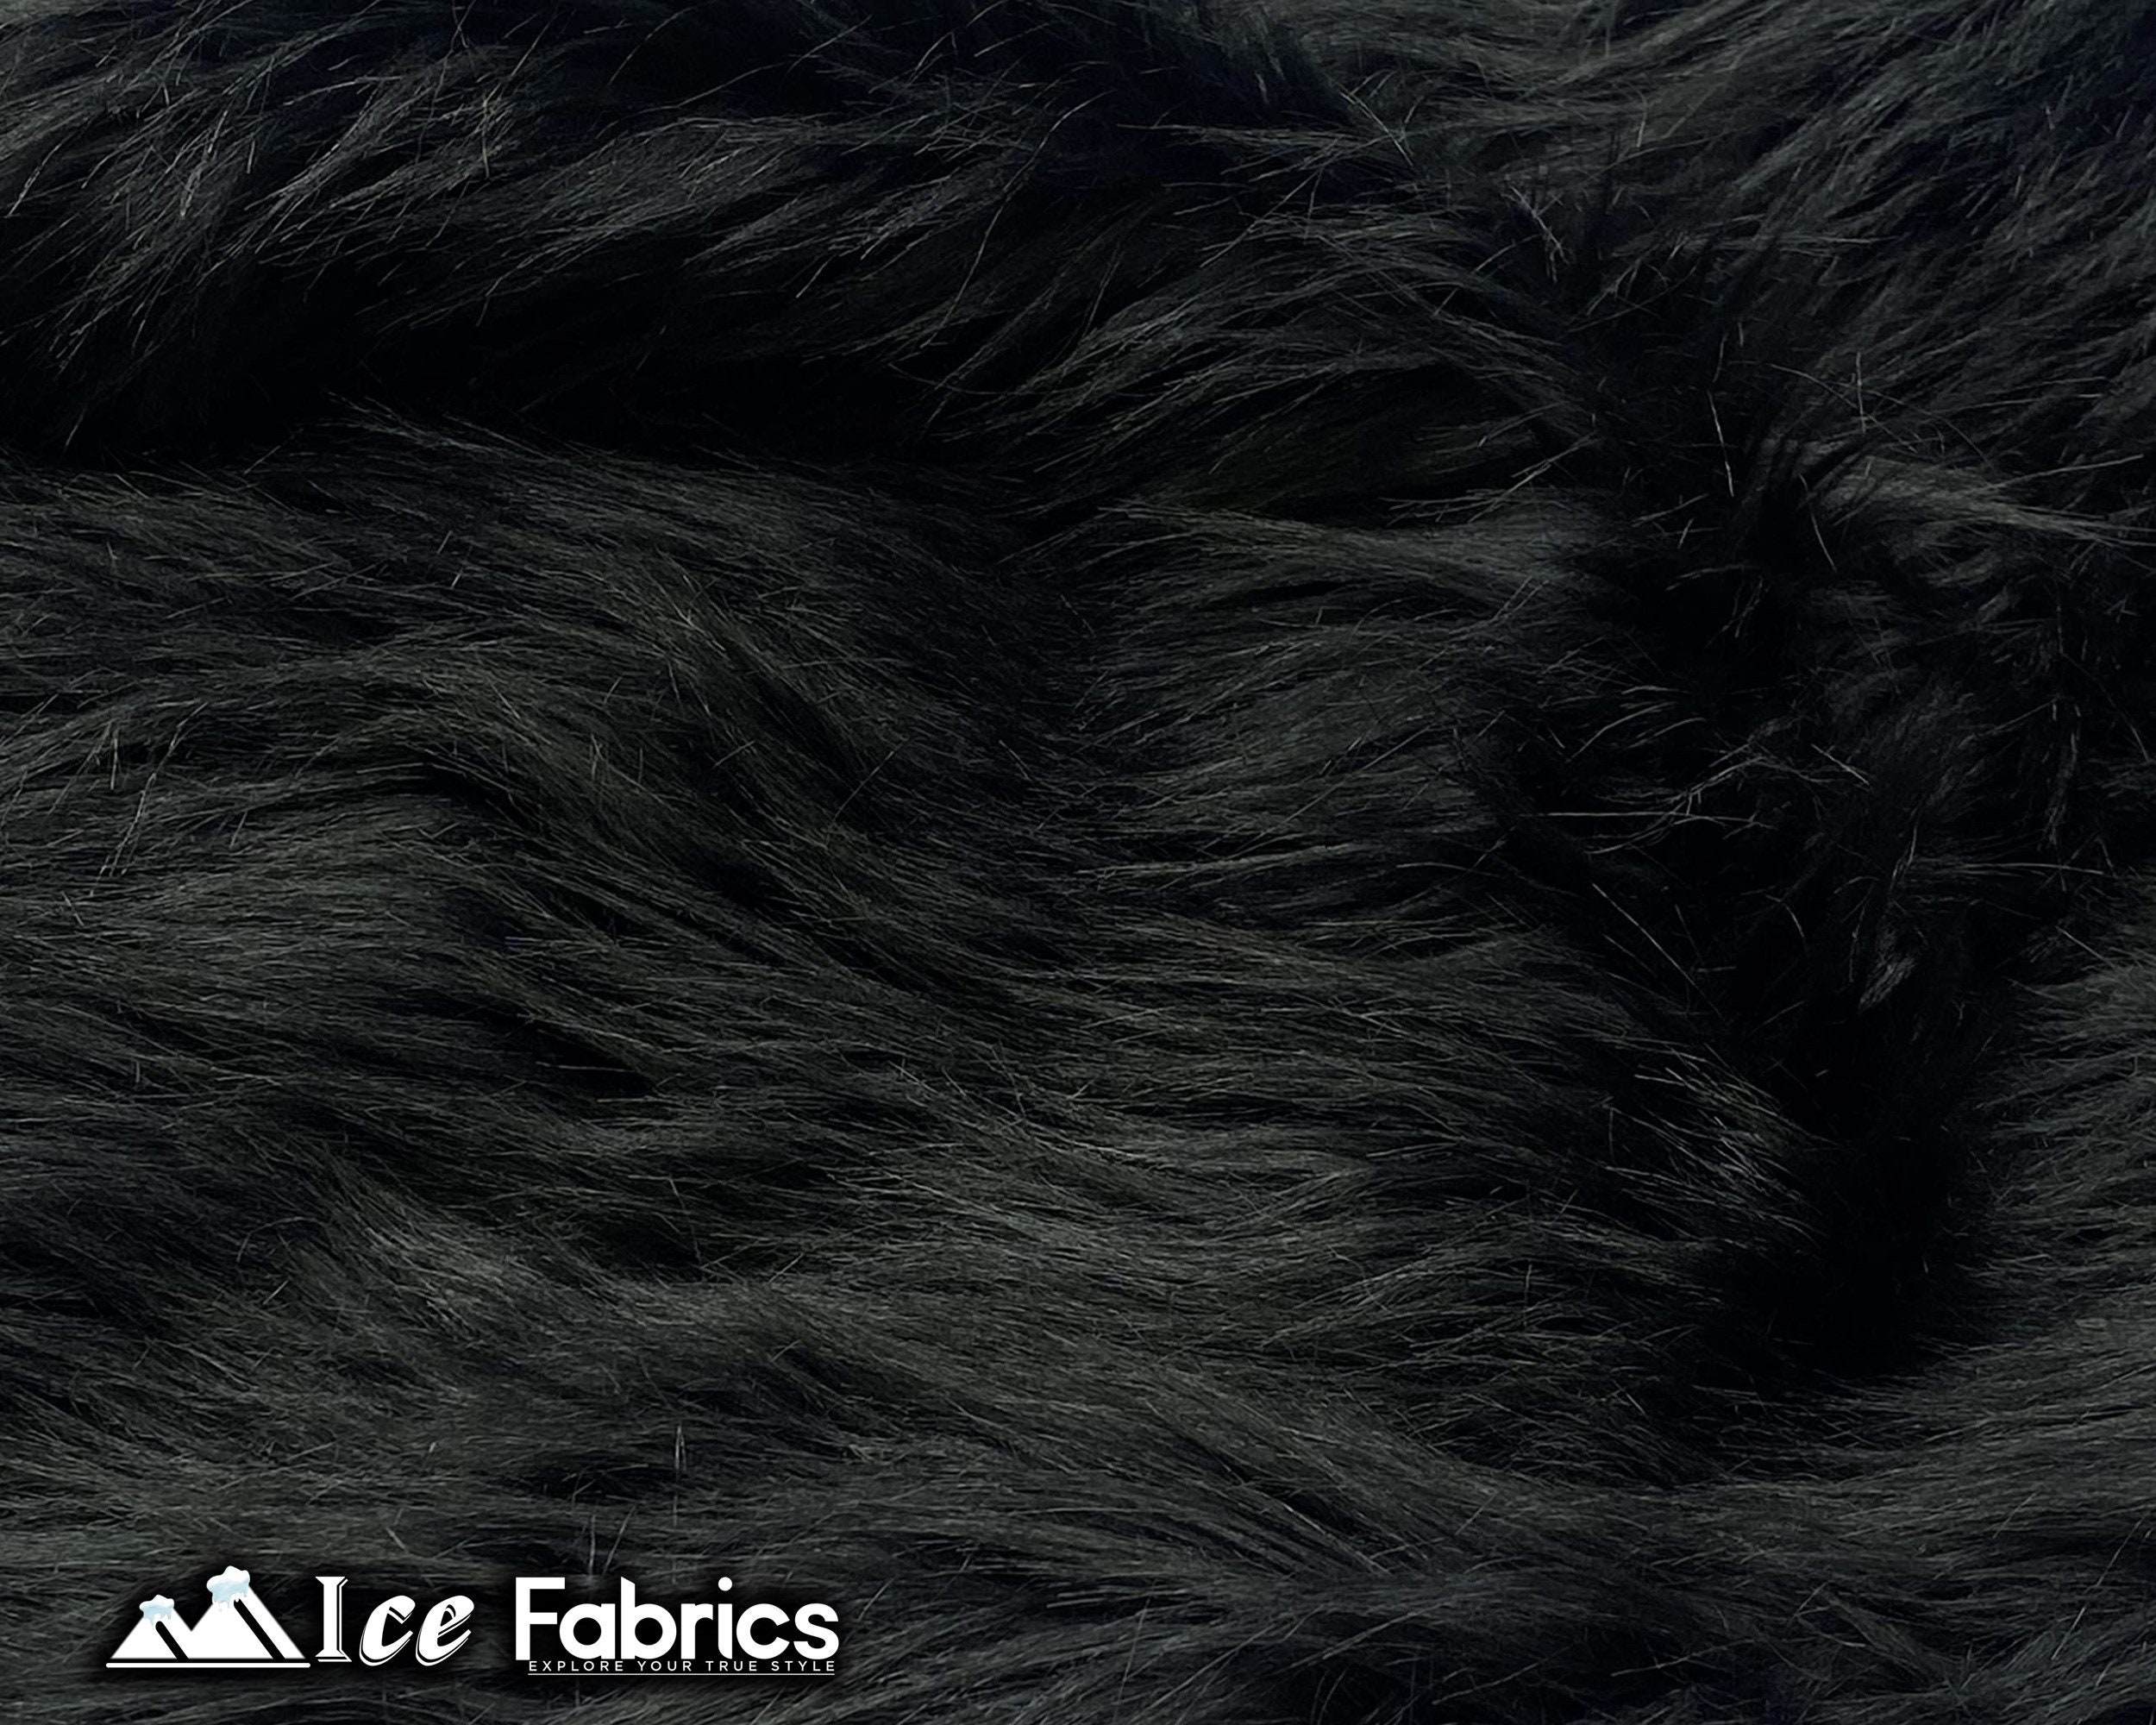 Eden BLACK Shaggy Long Pile Soft Faux Fur Fabric for Fursuit, Cosplay  Costume, Photo Prop, Trim, Throw Pillow, Crafts